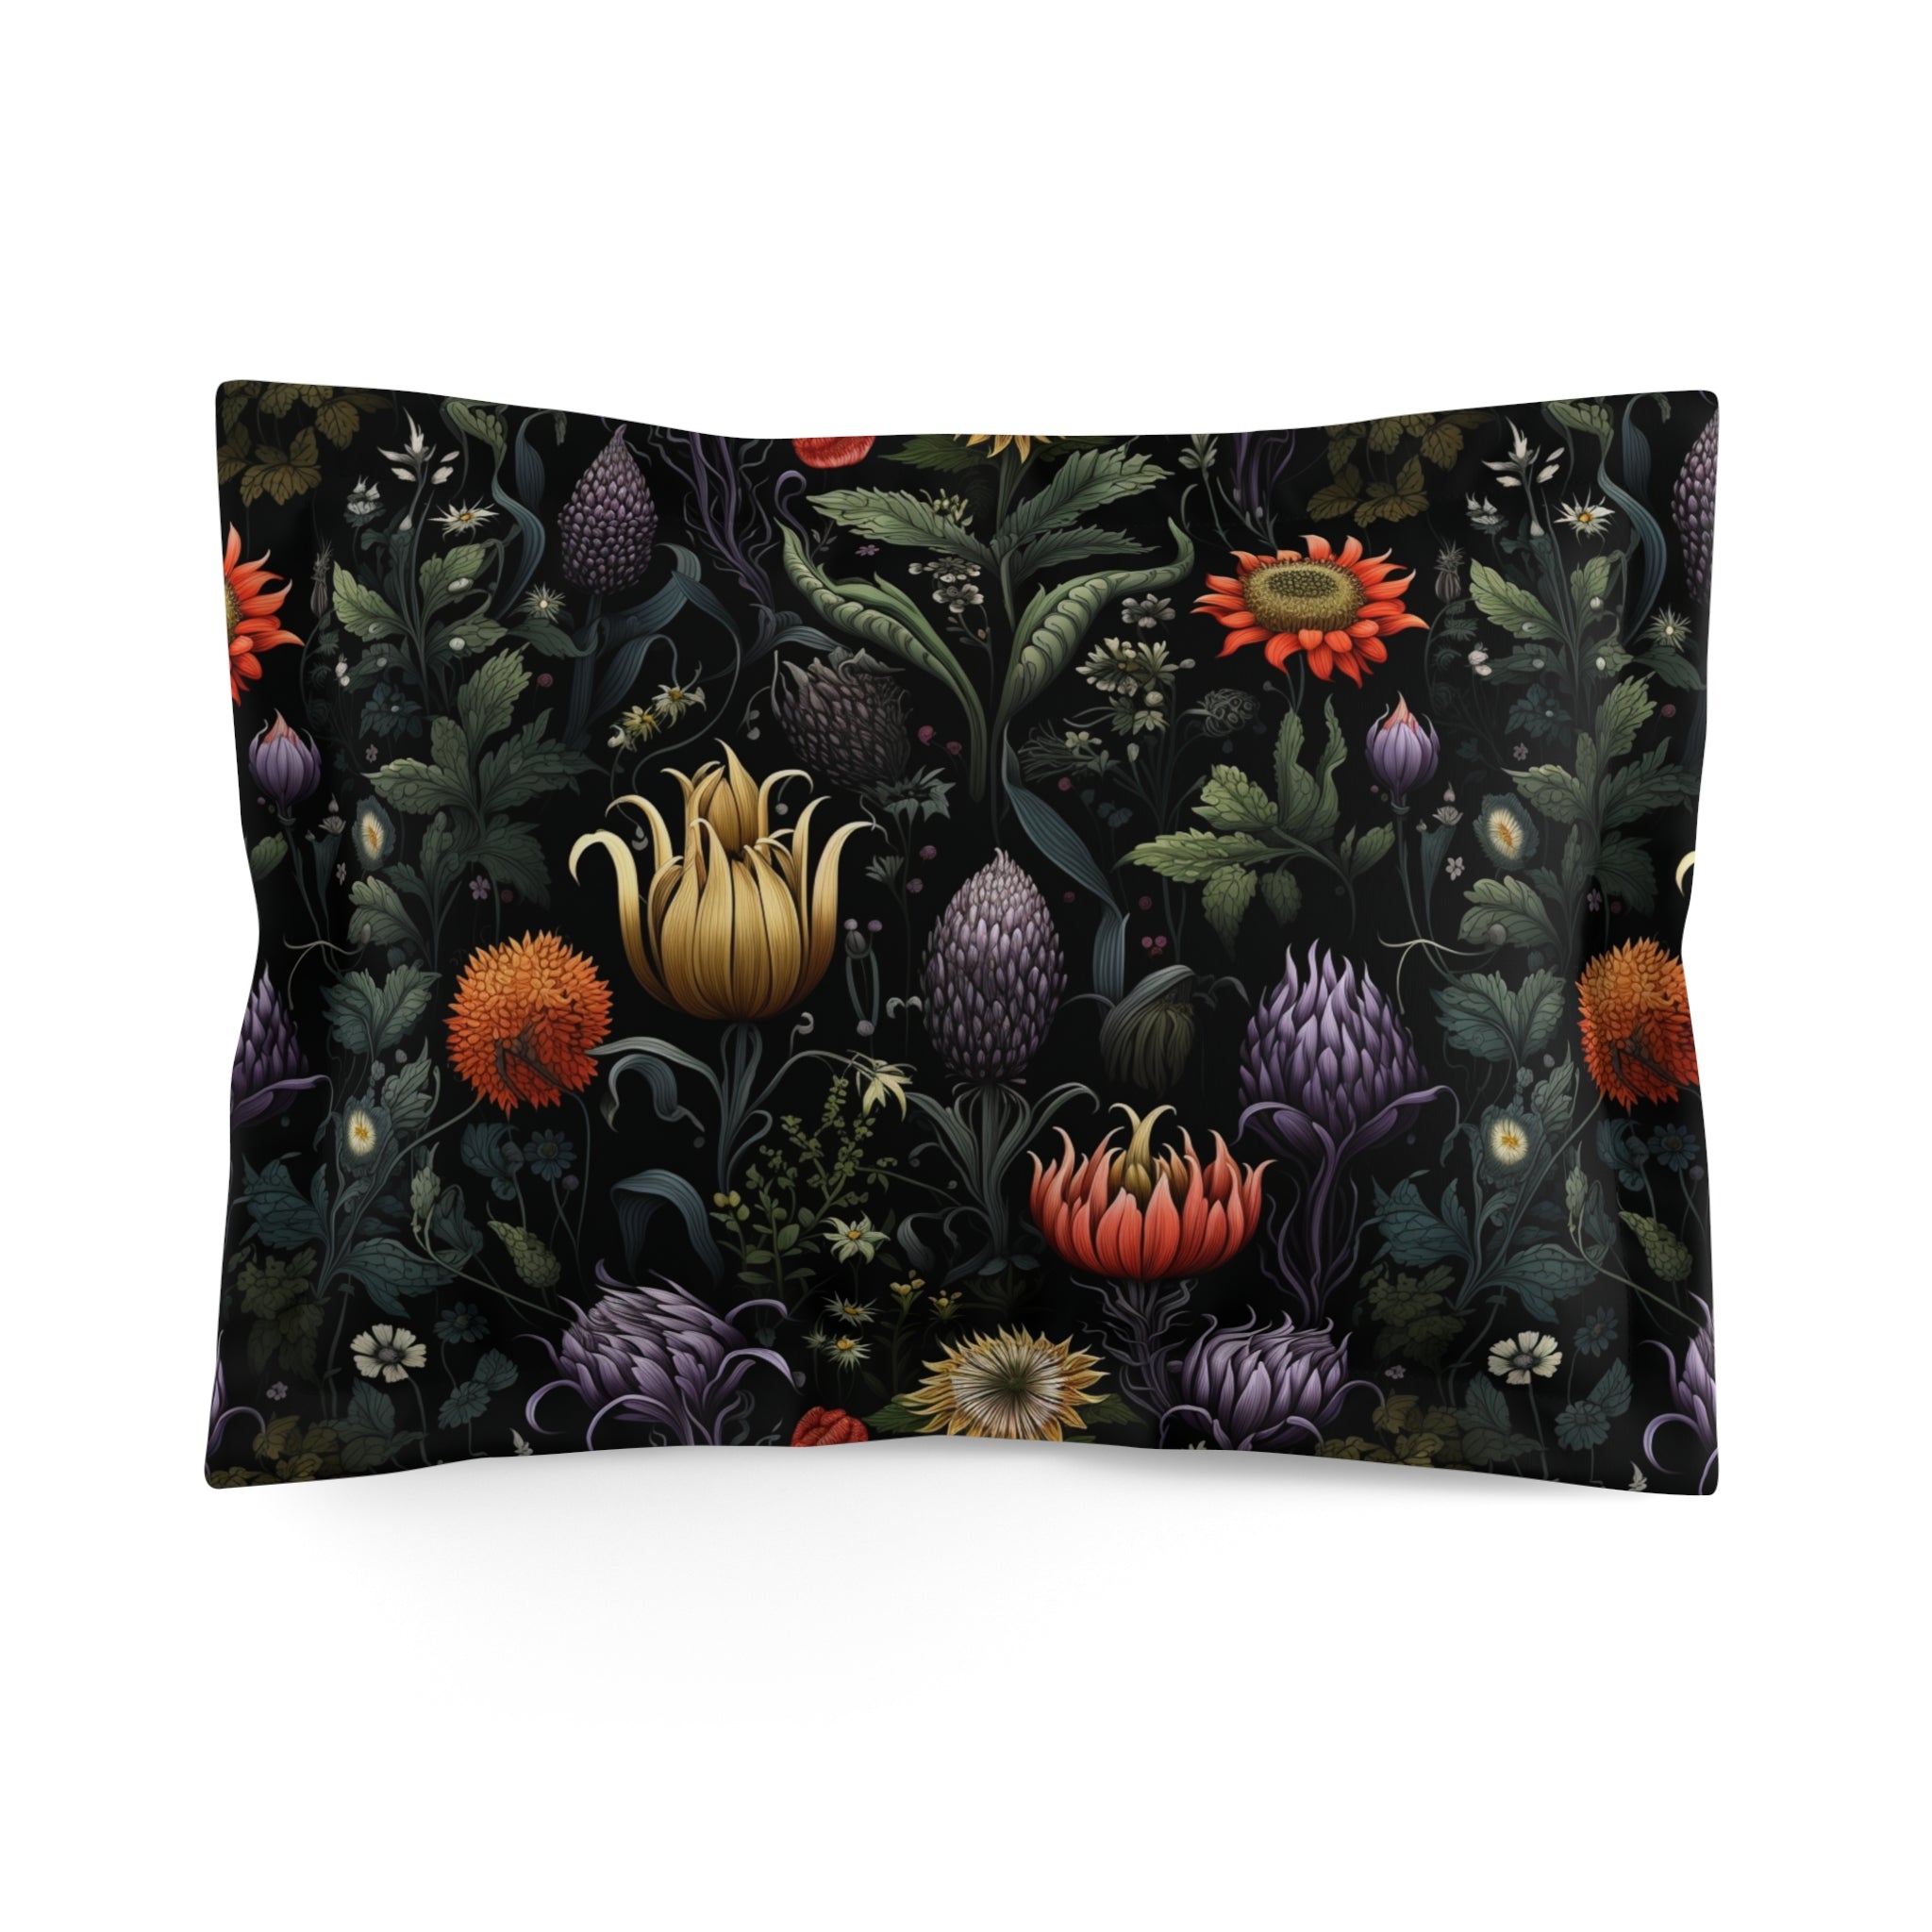 Enchanted Autumn Floral Microfiber Duvet Cover Set with Pillow Shams